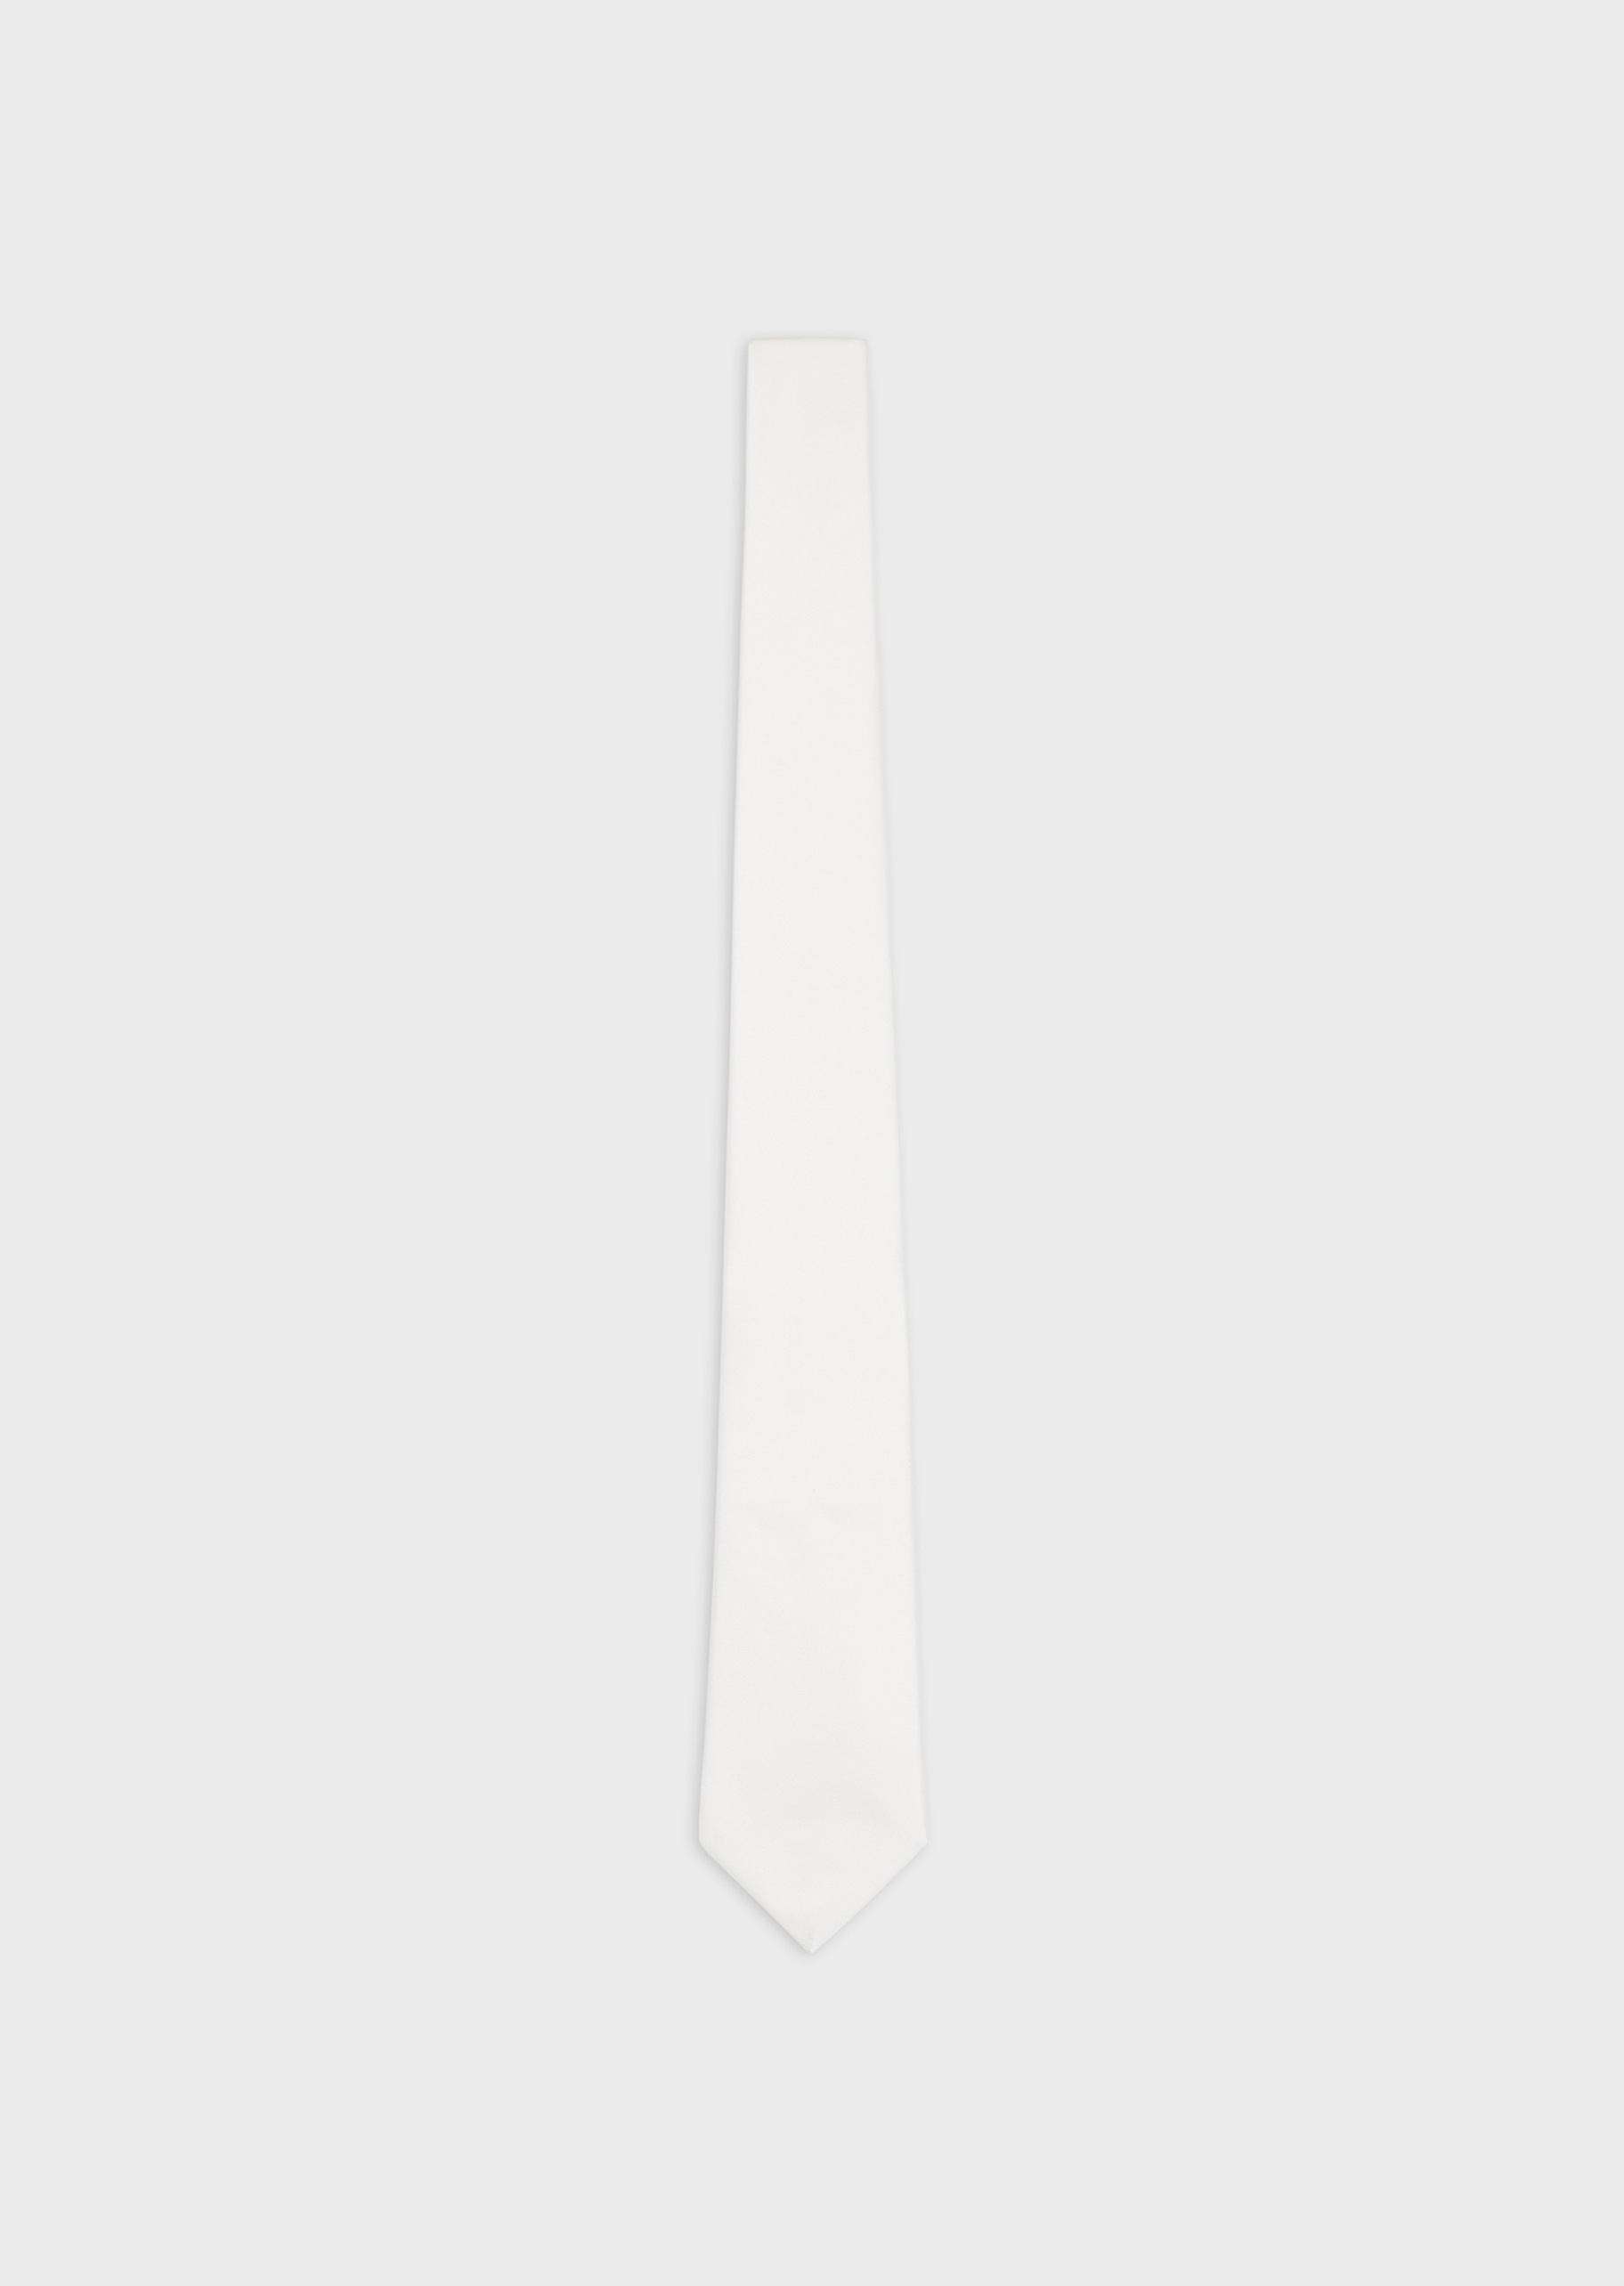 Giorgio Armani 男士休闲简约桑蚕丝纯色商务领带